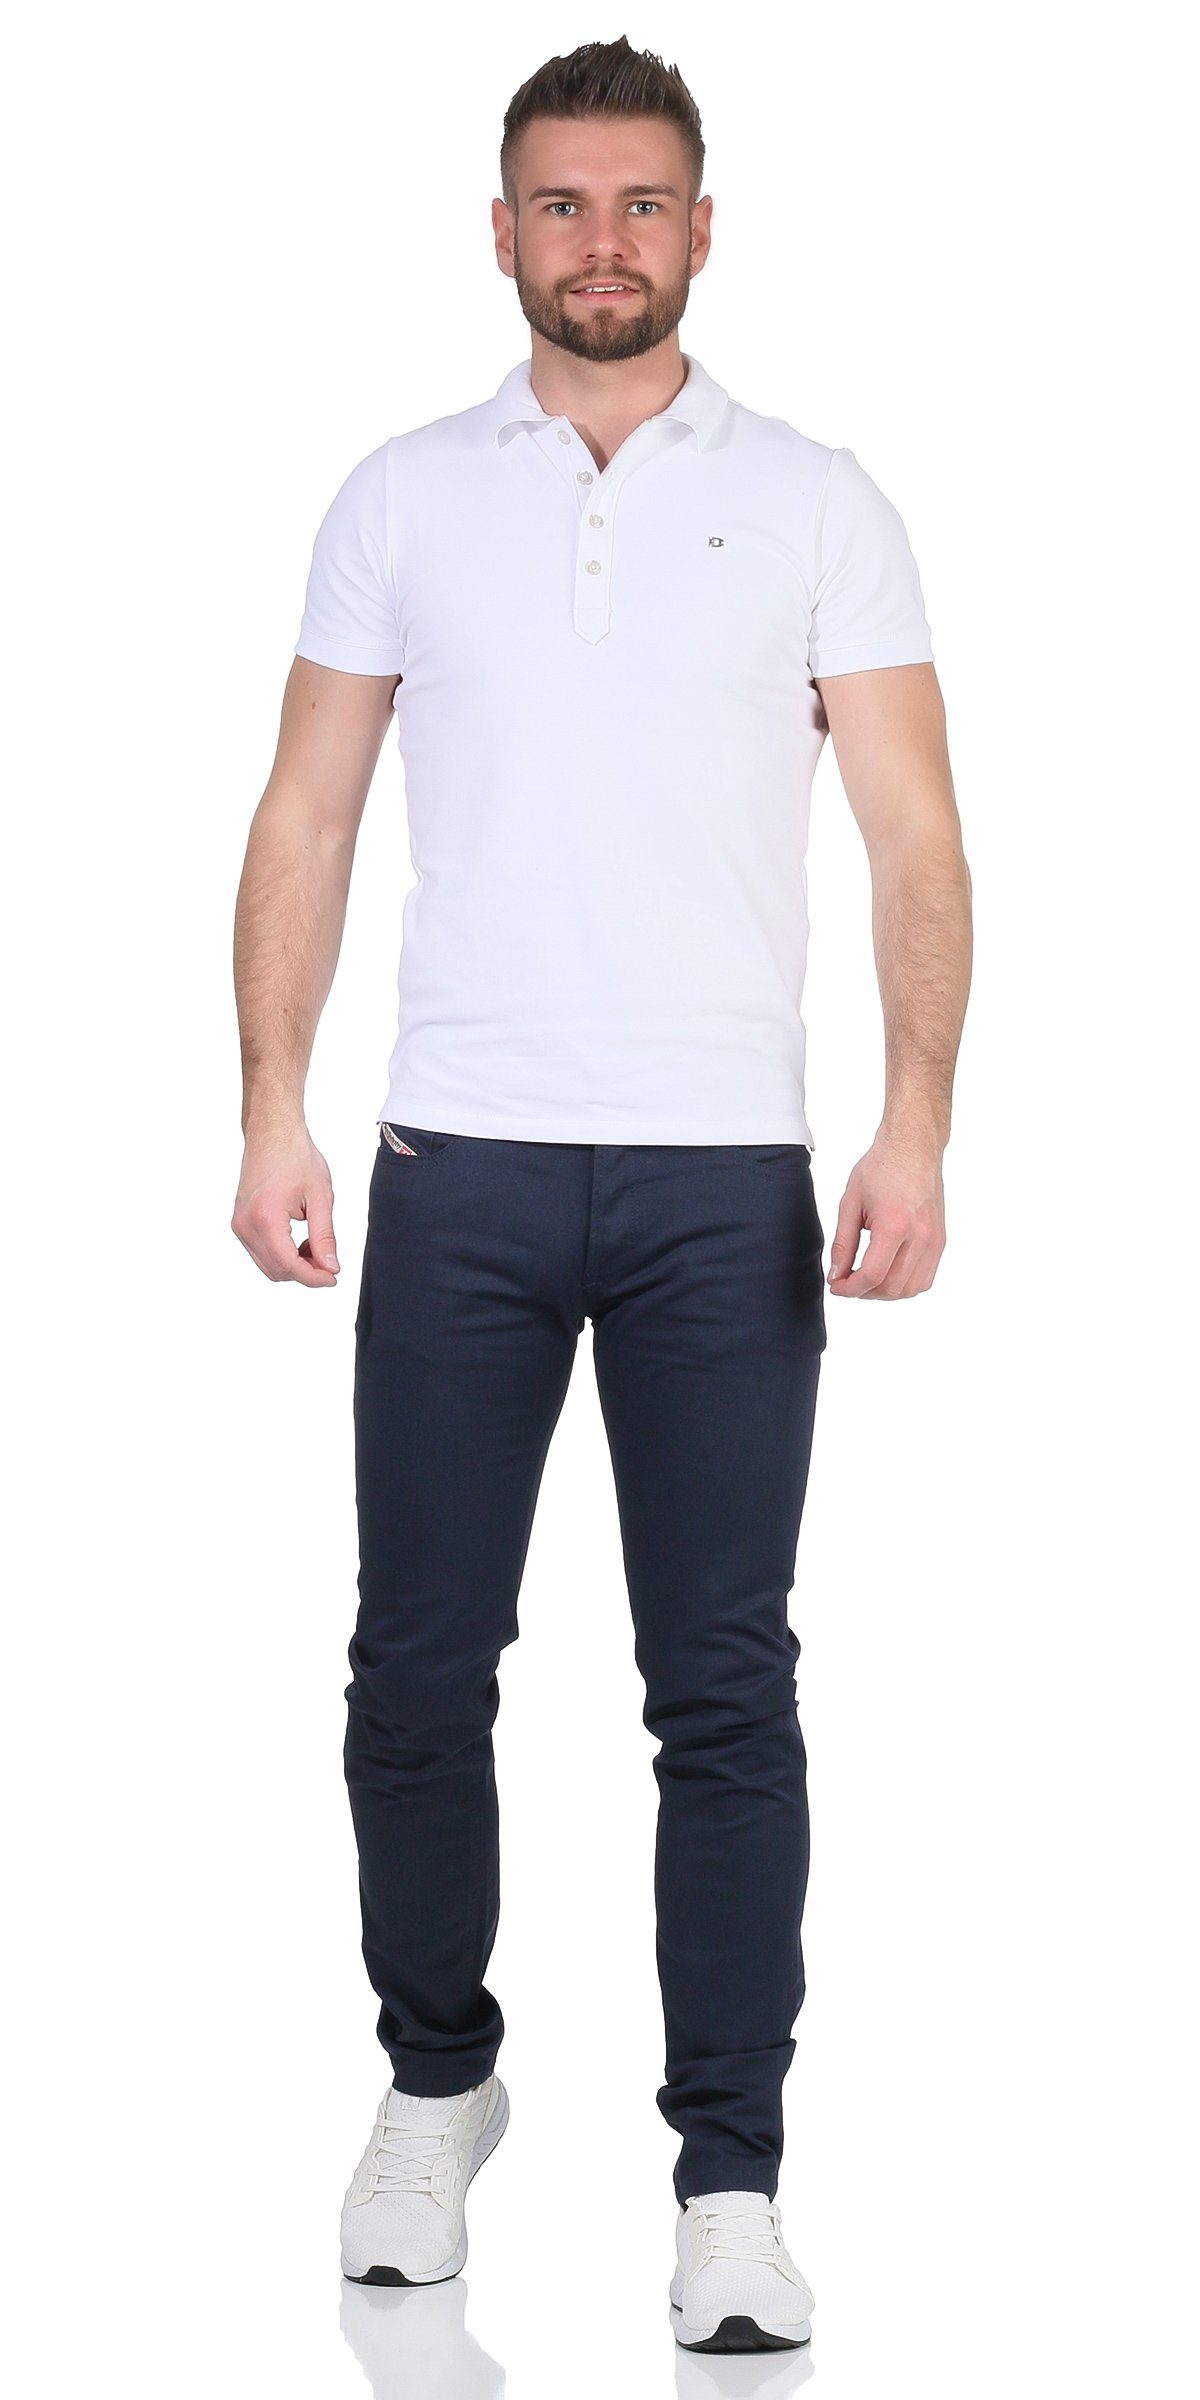 Hose, Skinny-fit-Jeans Einheitsgröße inch Sommer, 32 Diesel Herren Länge: R-TROXER-A Diesel Skinny-fit-Jeans 5-Pocket-Style, Navy